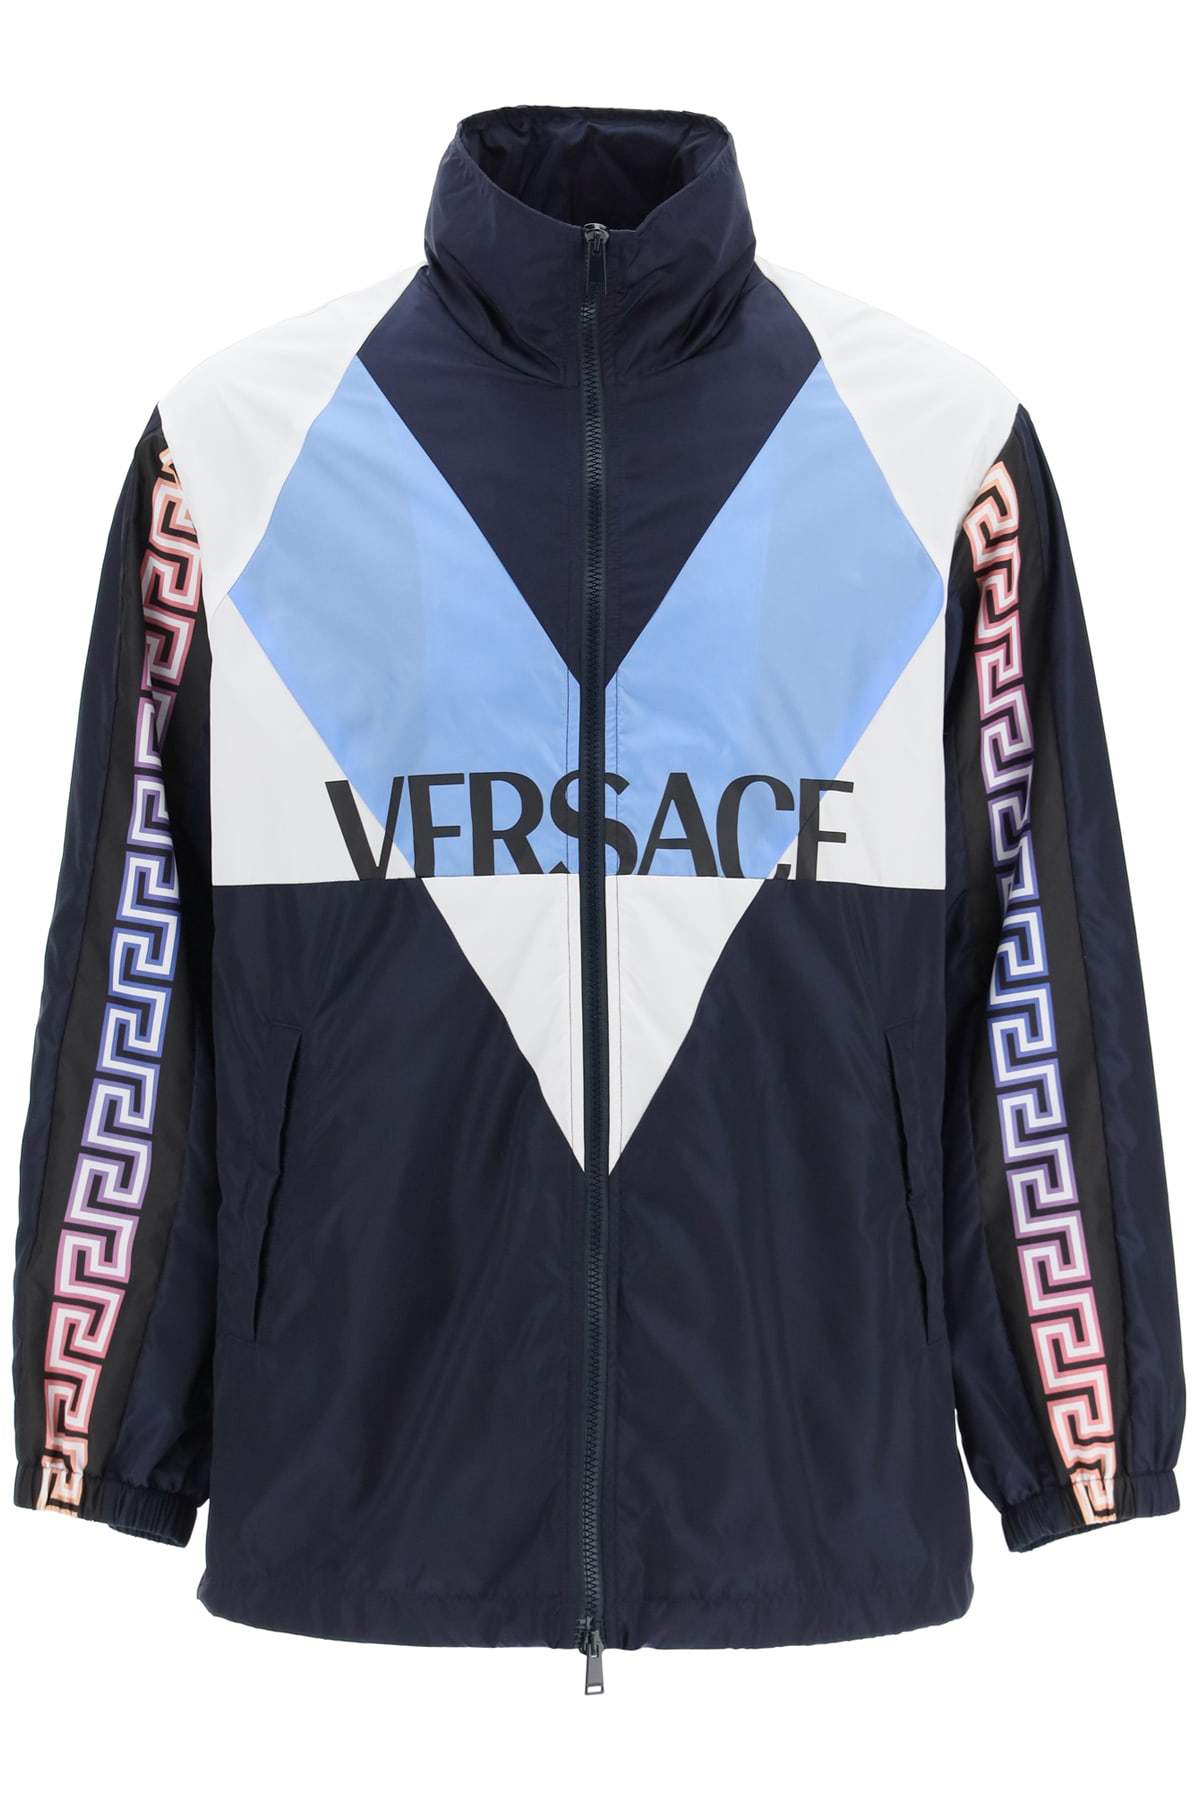 Versace Sweatshirt With Greek Motif Print